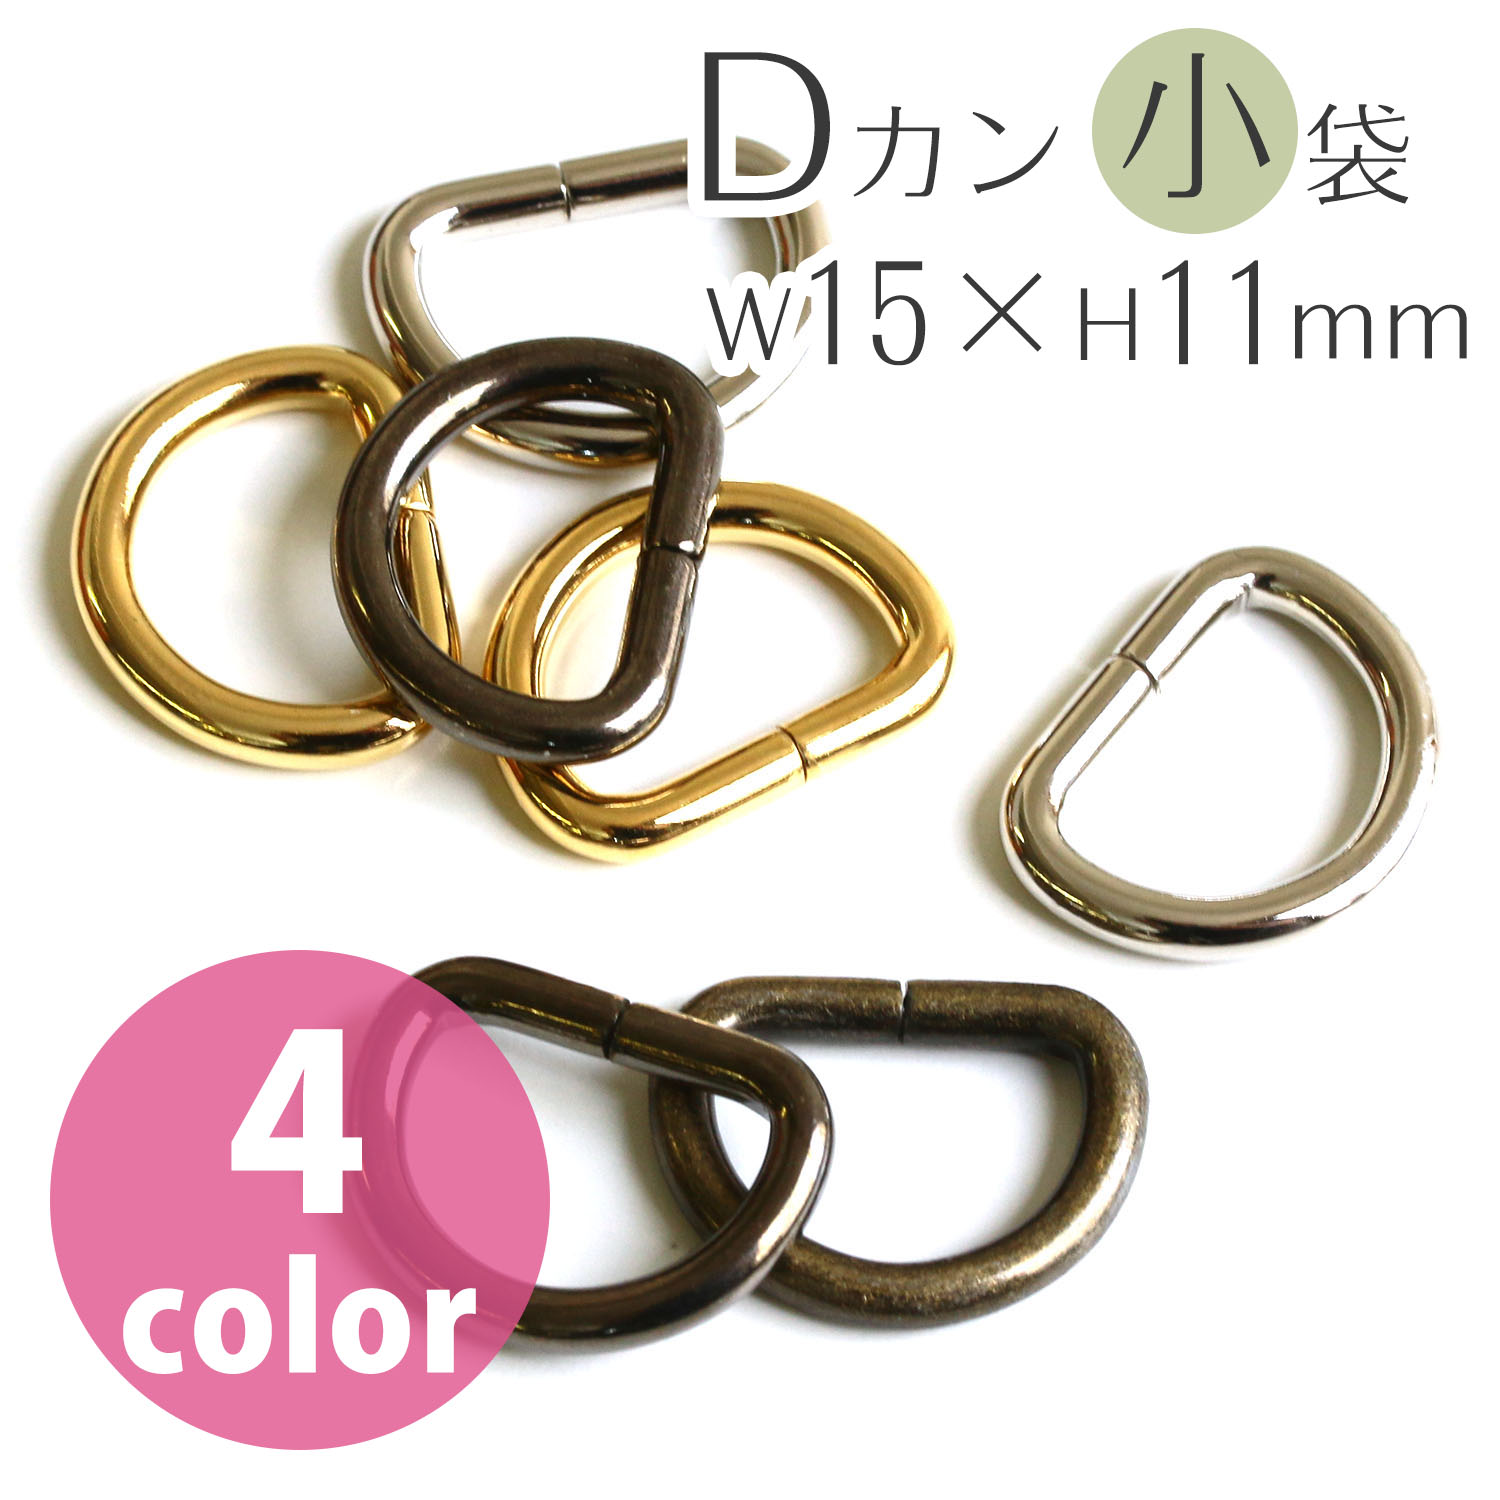 S22 D-Ring 15 x 11mm"", diameter 3mm (bag)